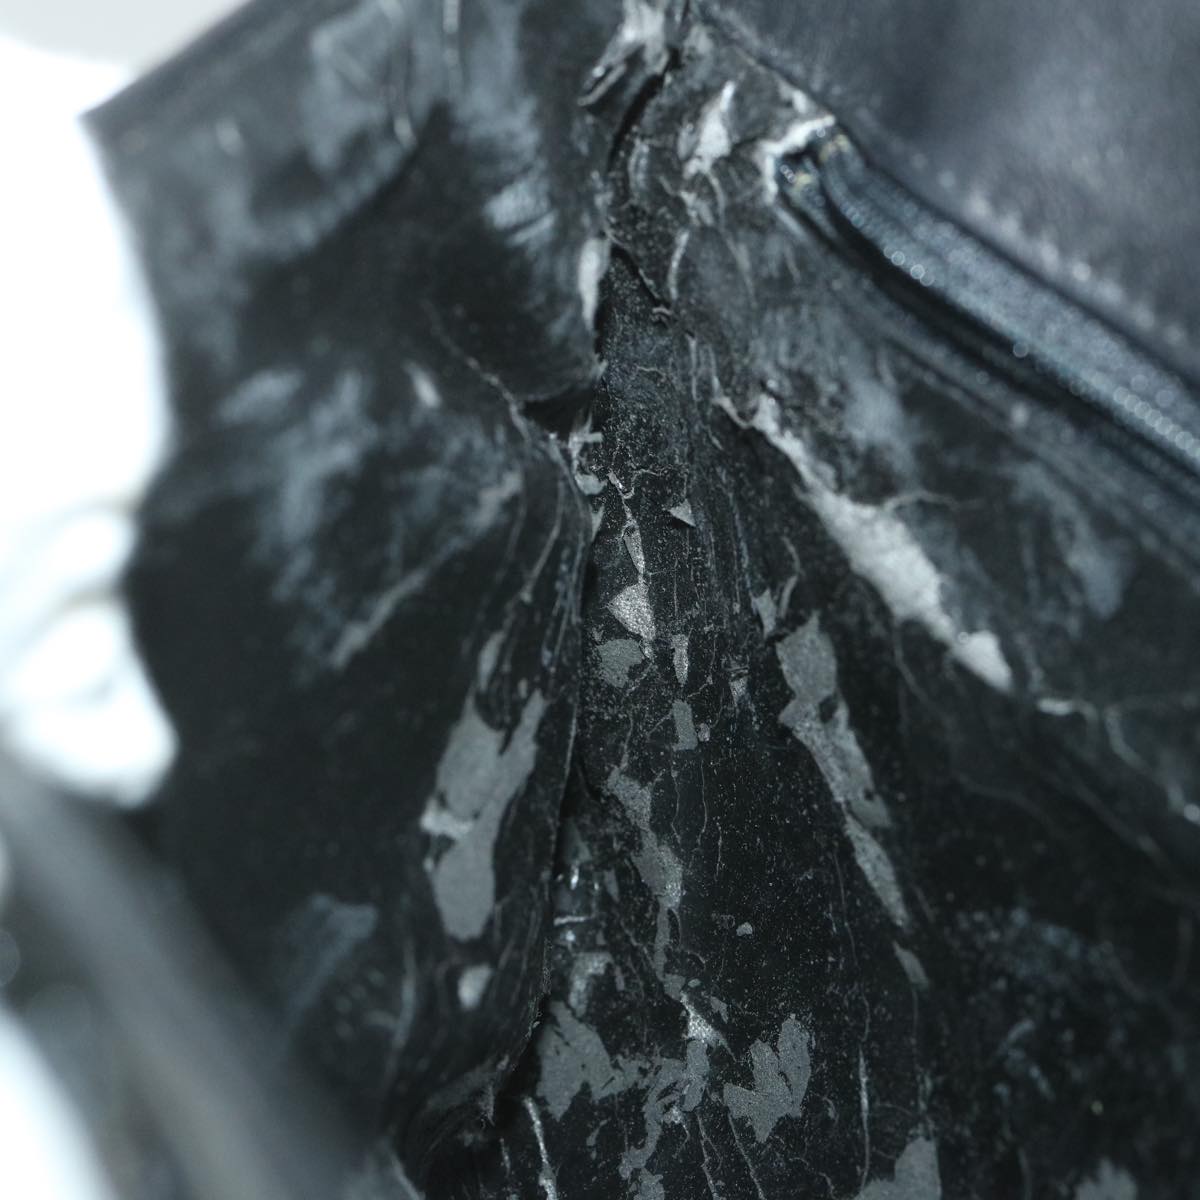 BALLY Shoulder Bag Leather Black Auth bs9690